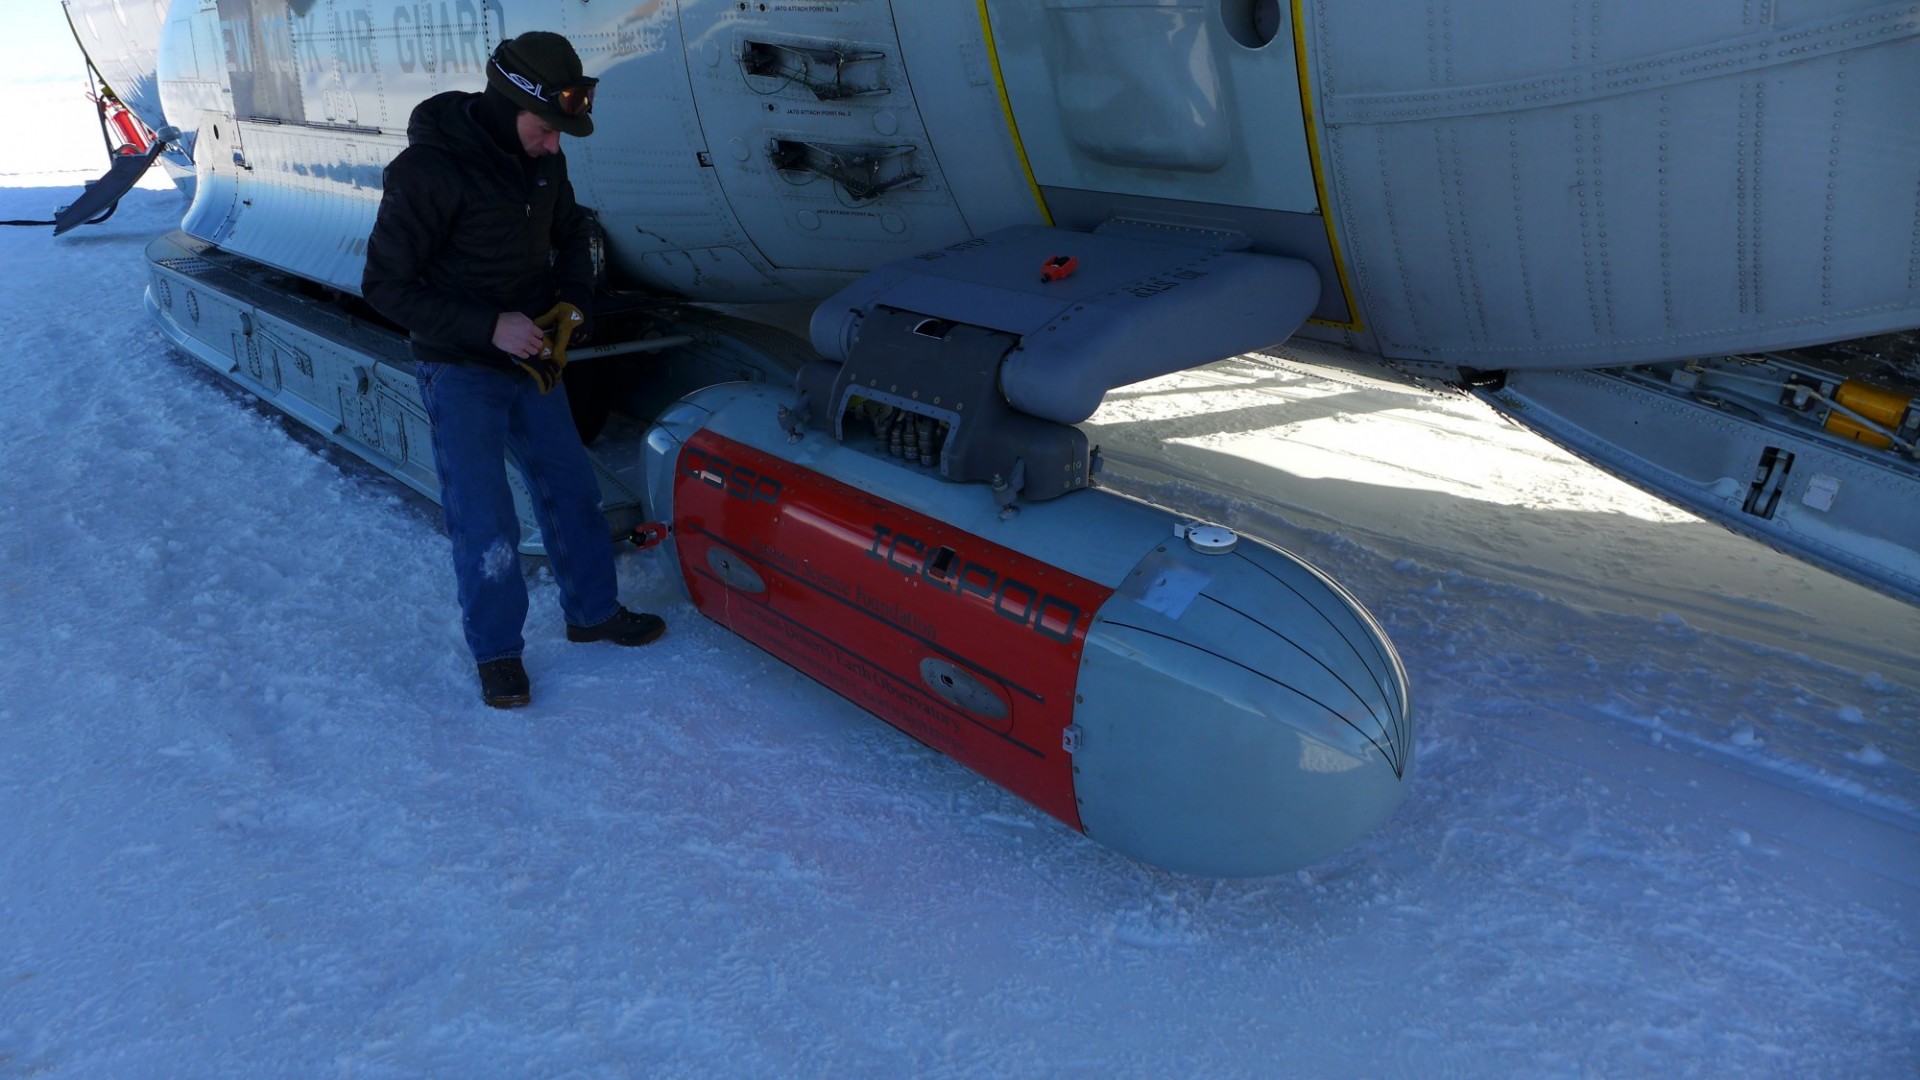 Engineer installs IcePod onto aircraft in Antarctica. Photo: Martin Wearing